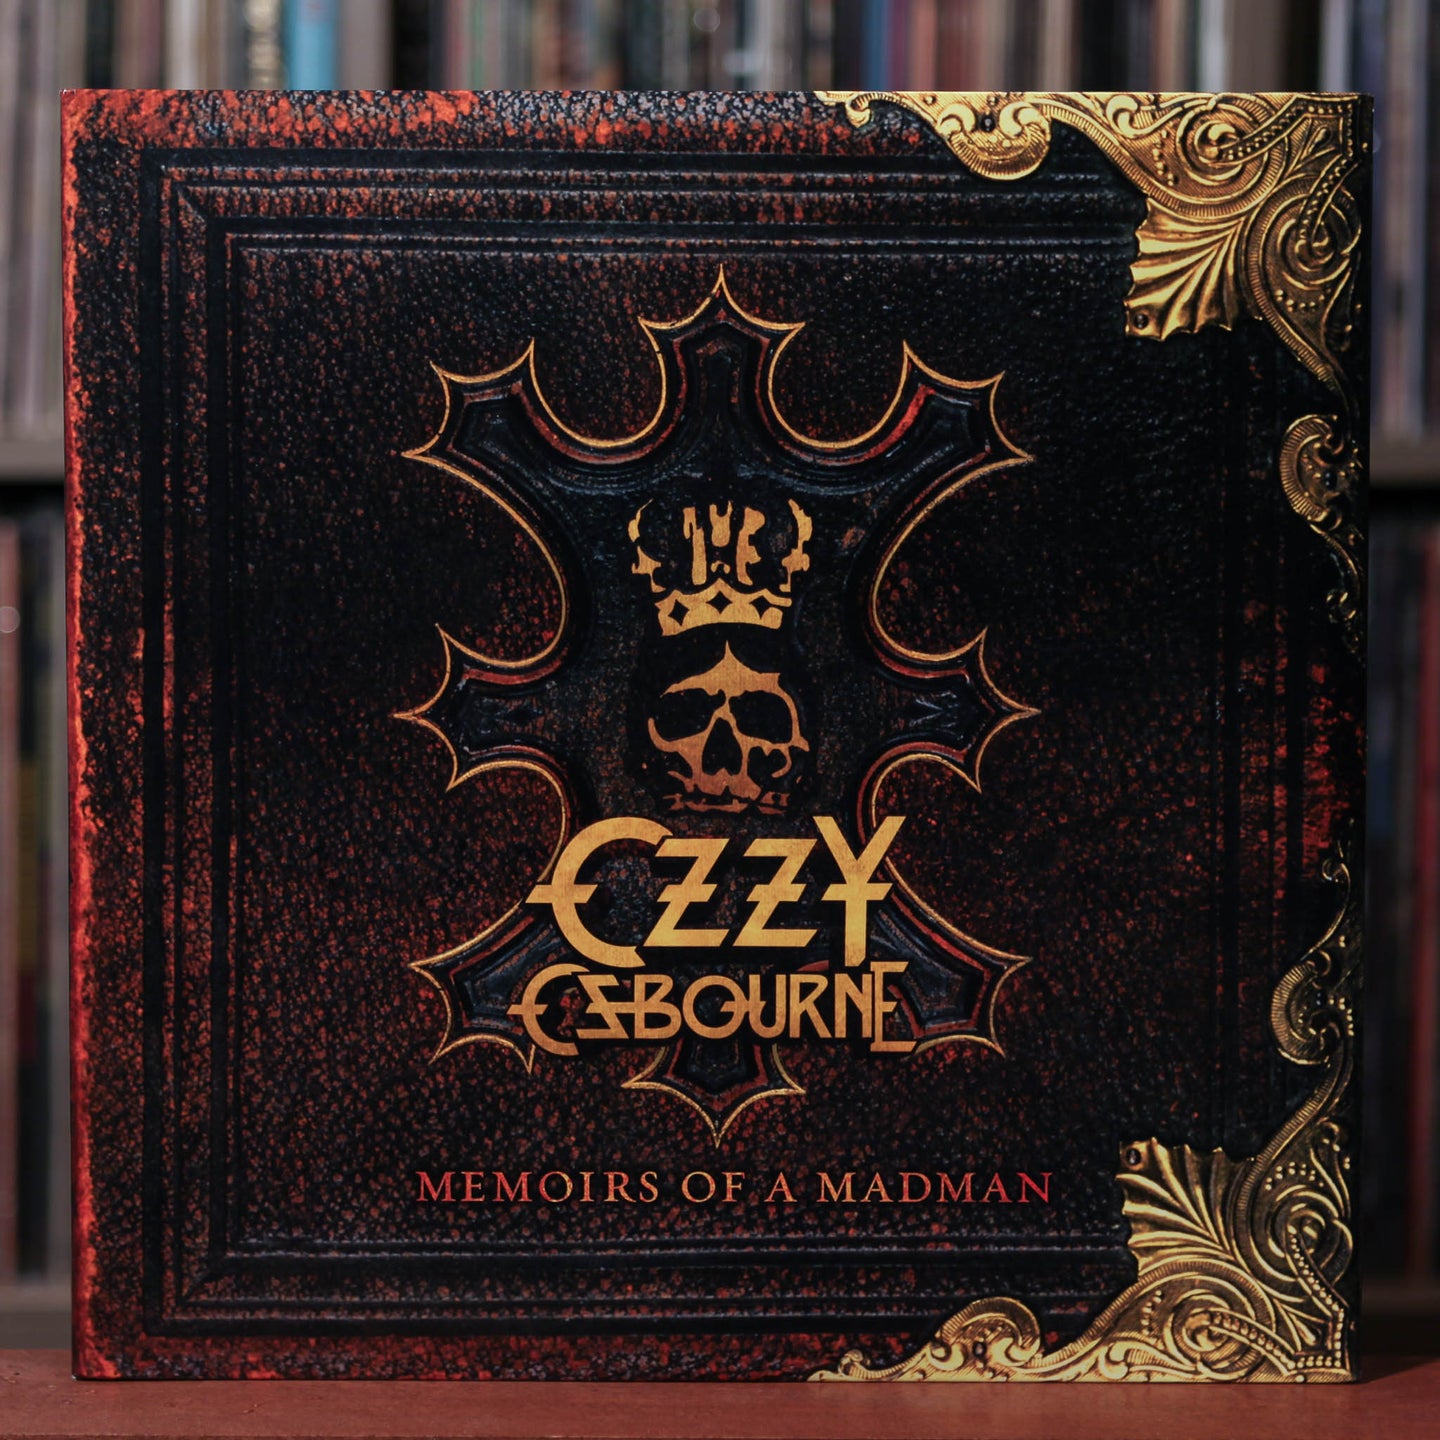 Ozzy Osbourne - Memoirs Of A Madman - Ltd Picture Disc #2932 - 2014 Epic, NM/NM